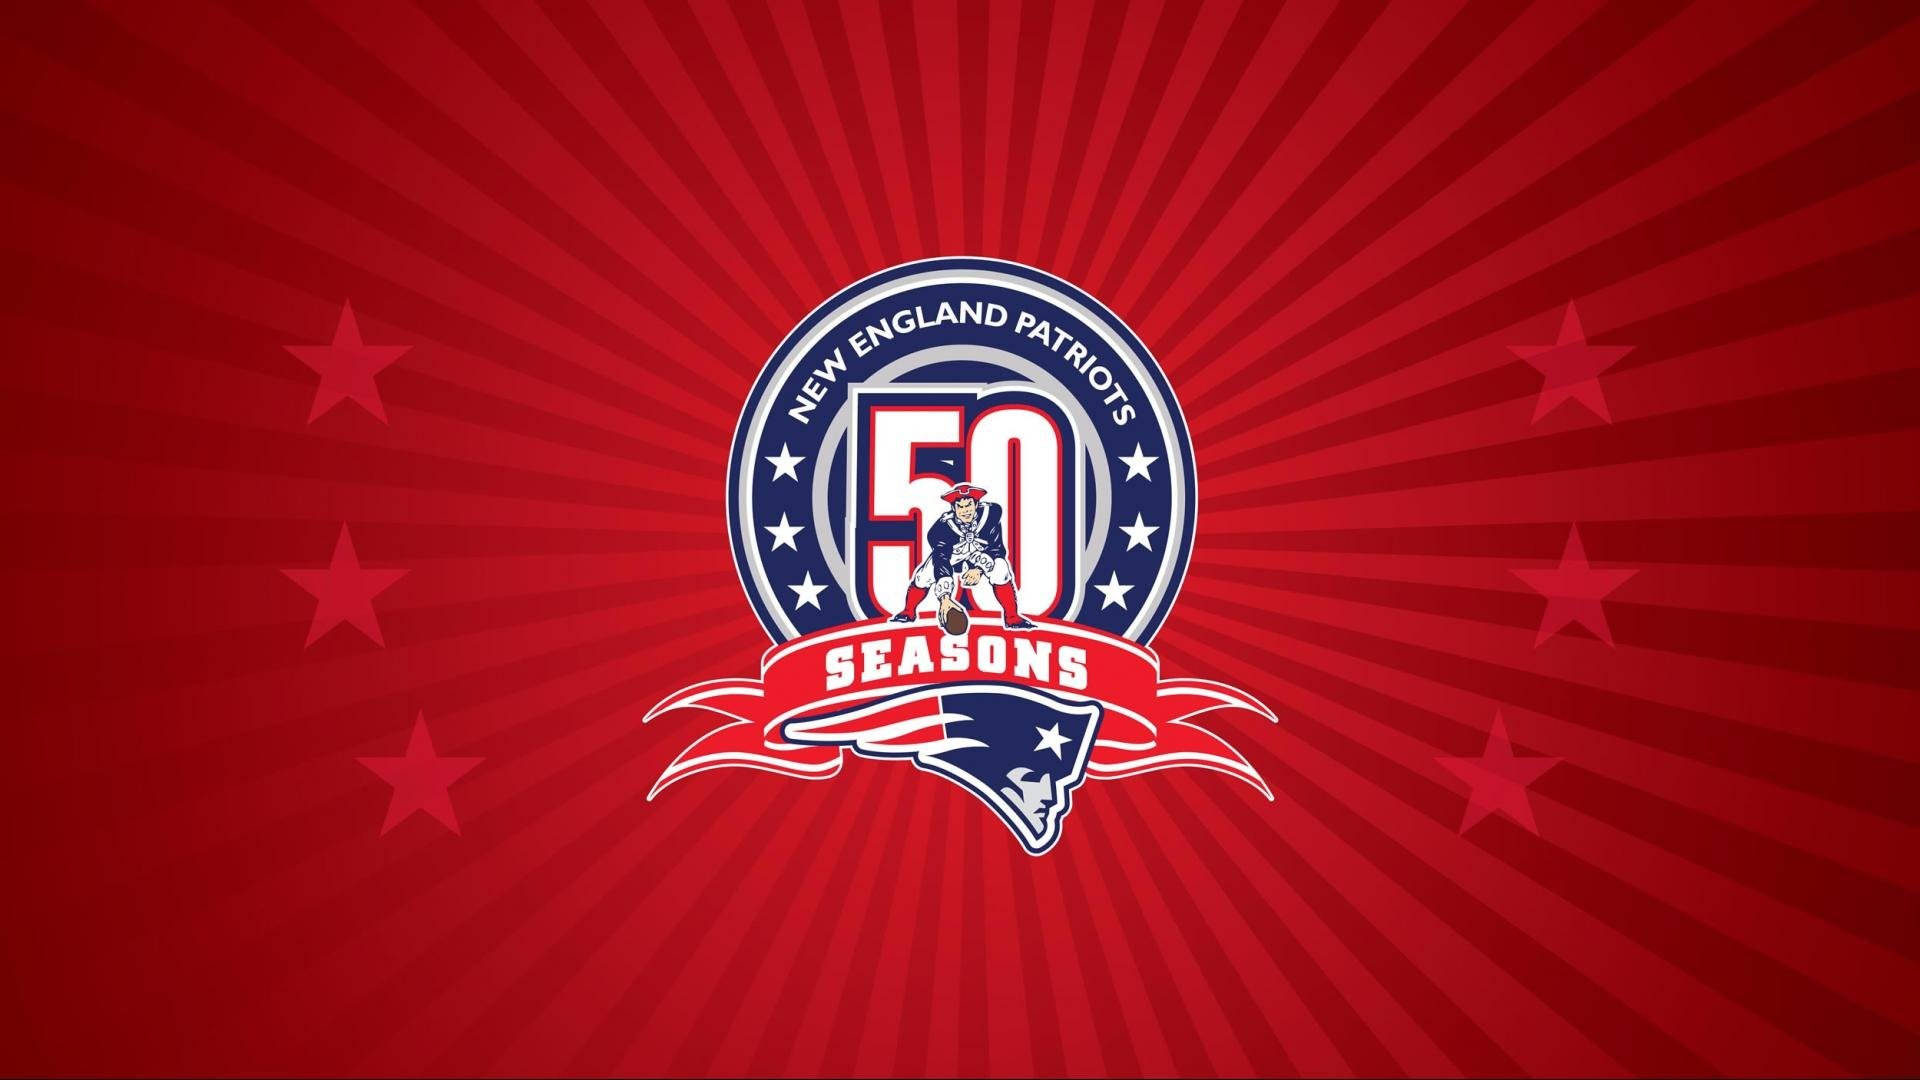 Patriots Logo 50 Seasons In Nfl Background